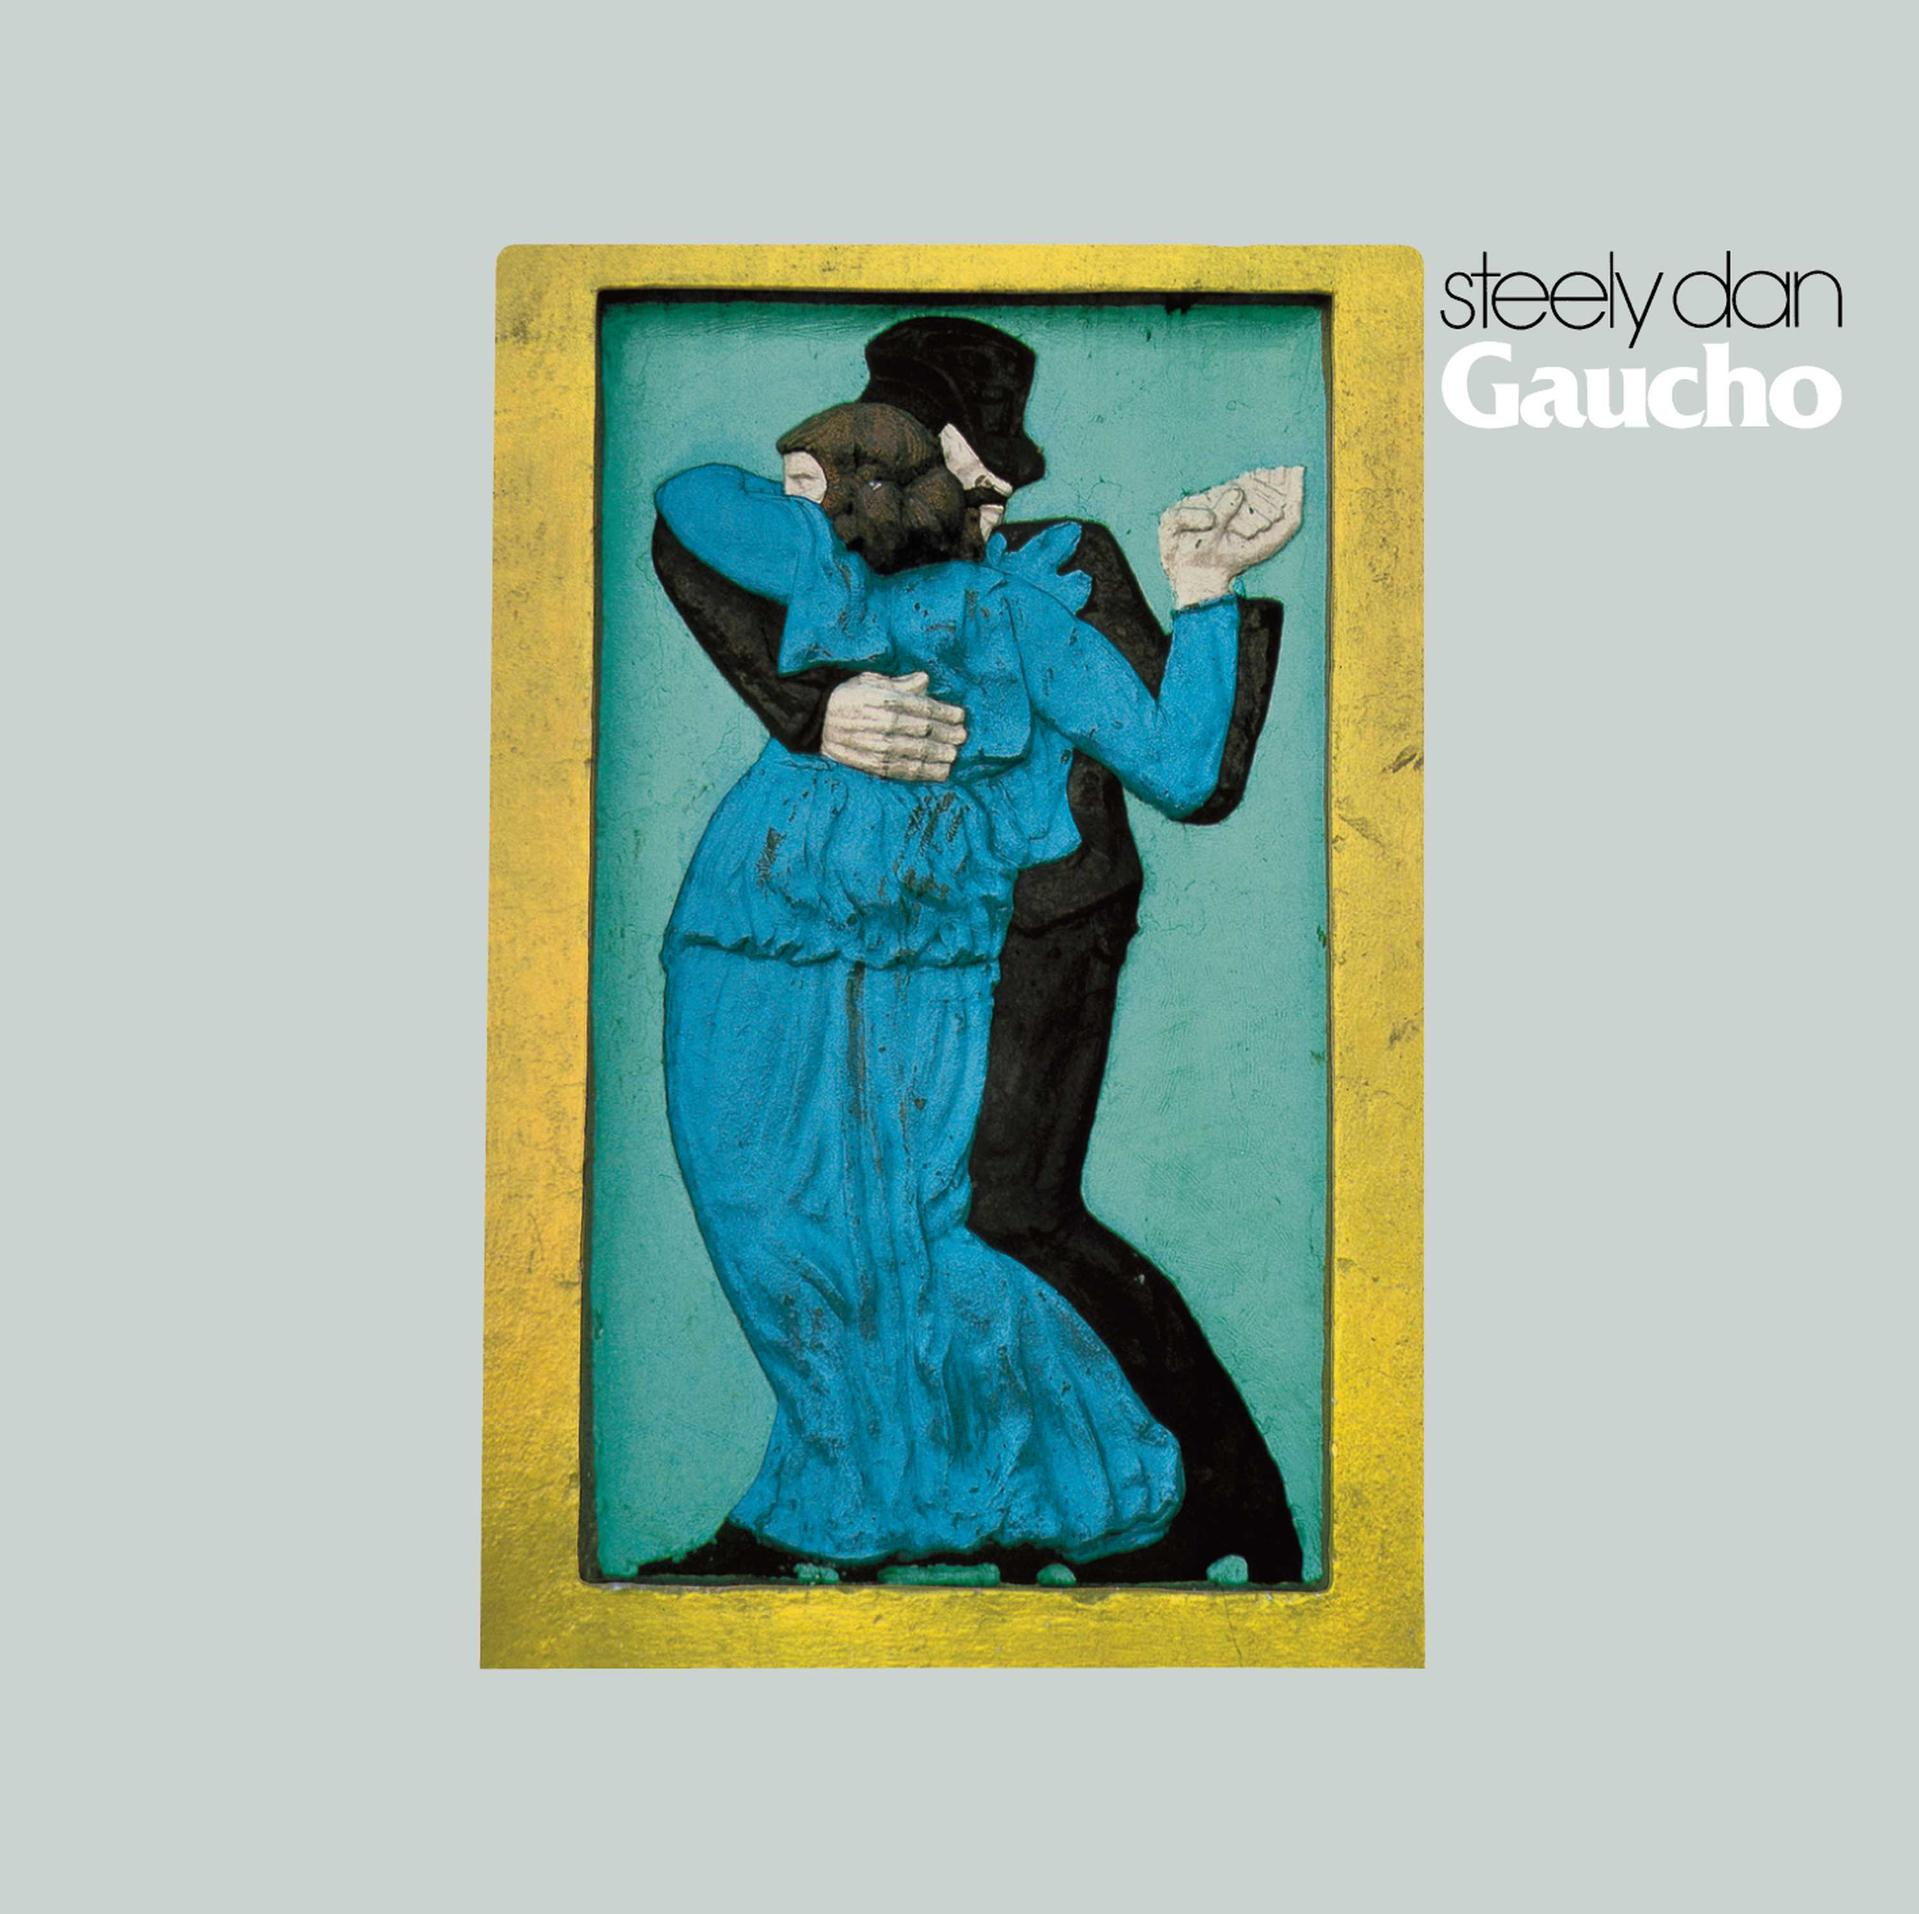 Steely - (LTD. Gaucho (Vinyl) Dan Vinyl) -